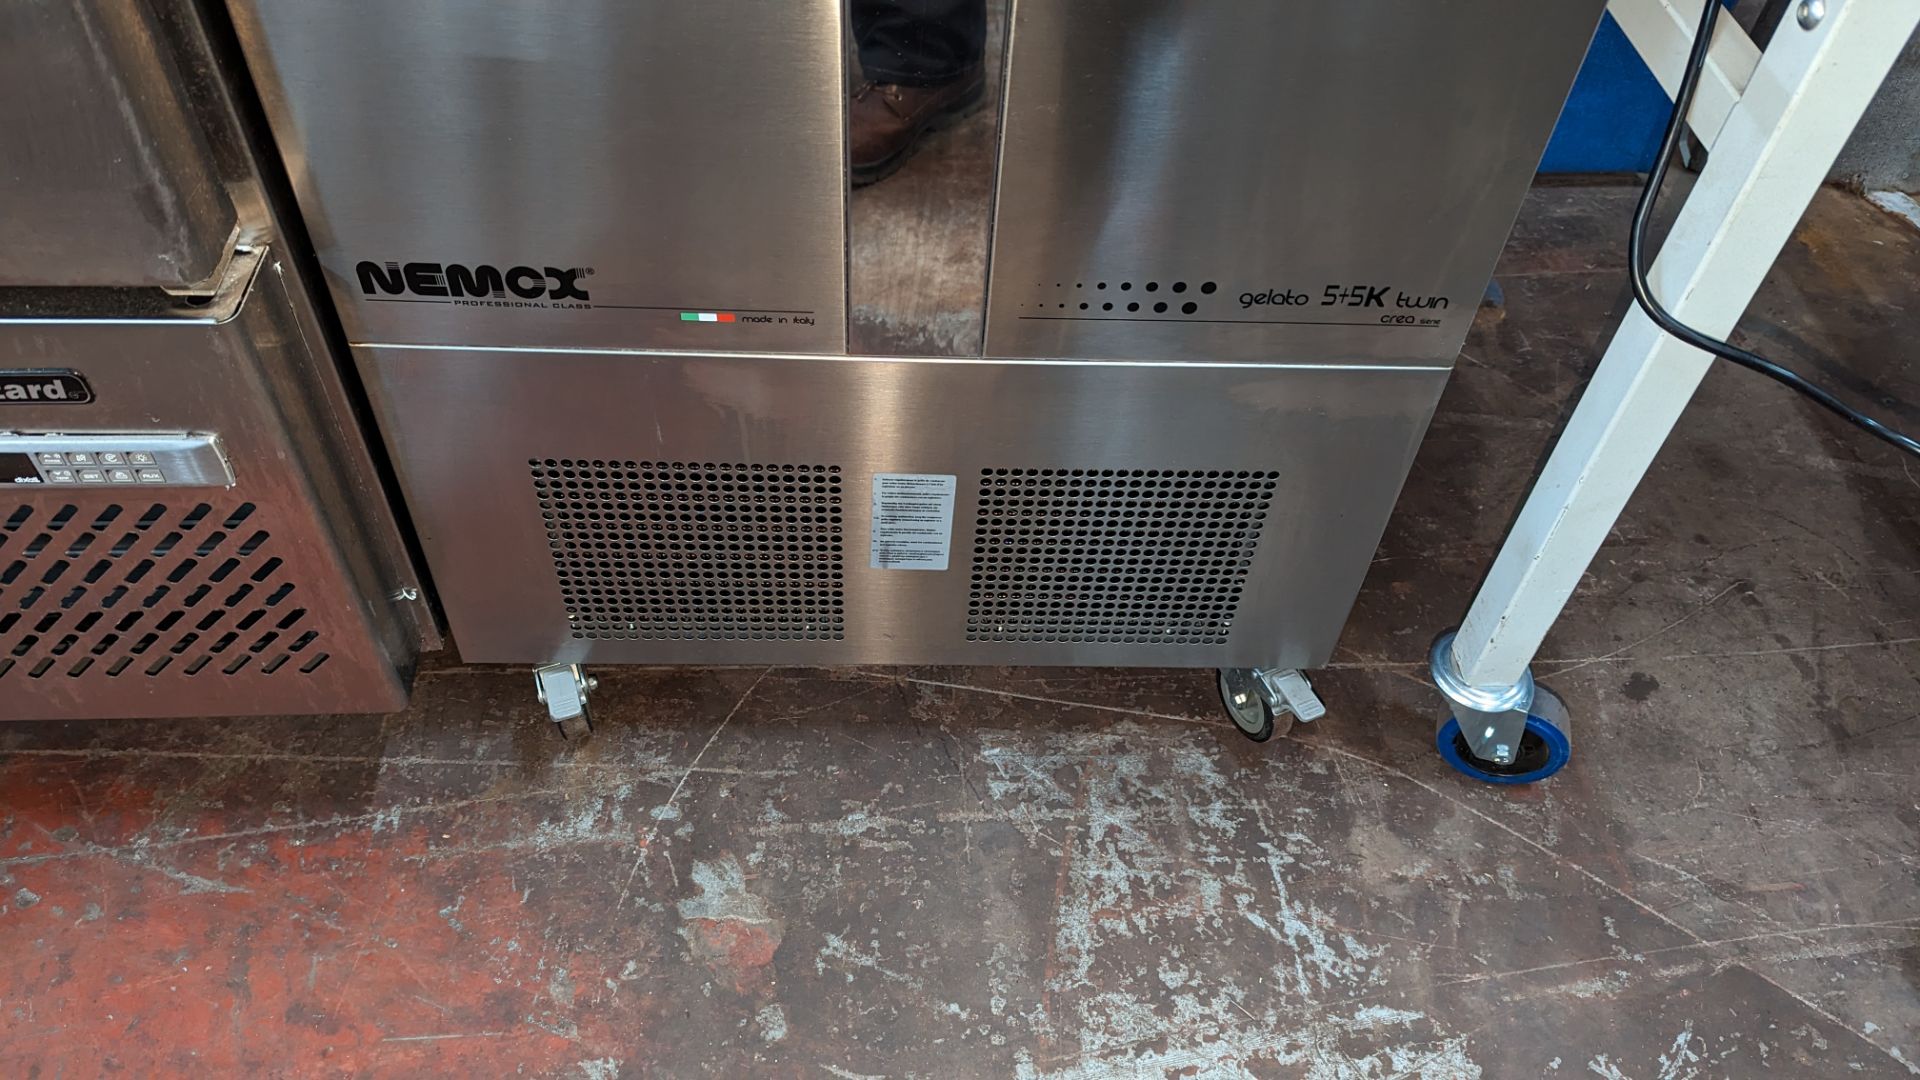 Nemox Gelato 5+5K twin creo series stainless steel floor standing mobile ice cream machine type CICM - Image 6 of 15